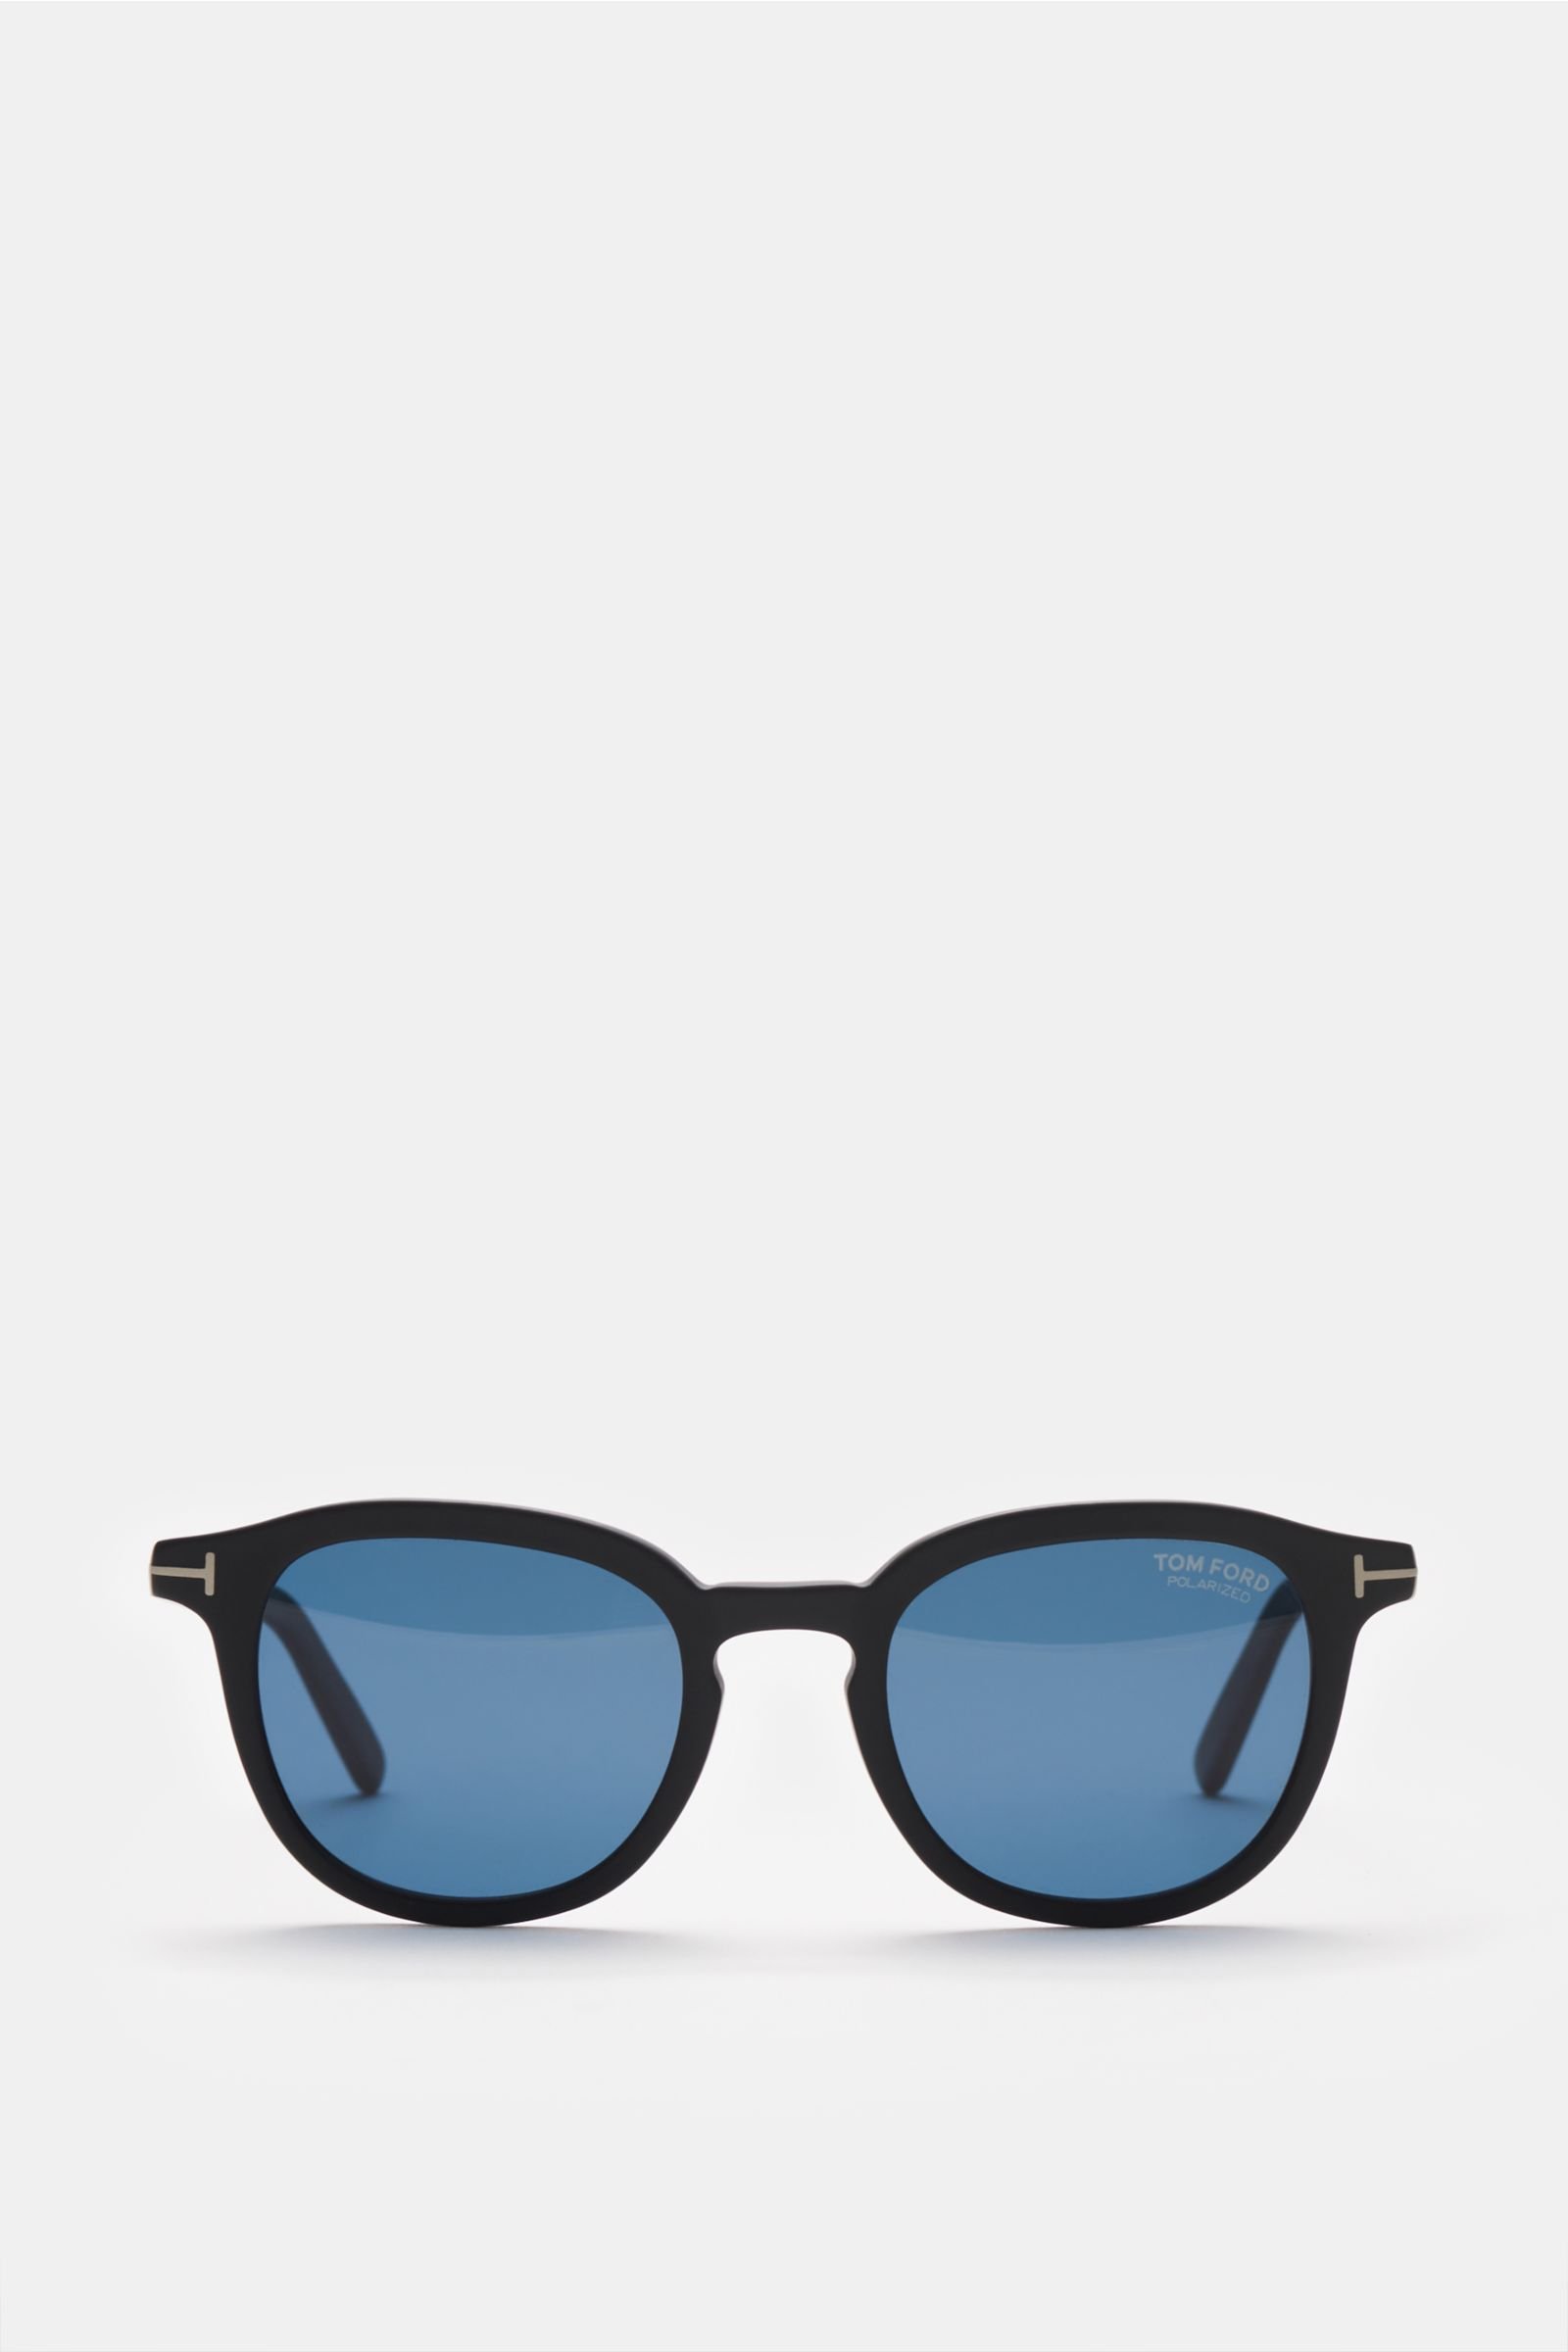 TOM FORD sunglasses 'Pax' black/dark blue | BRAUN Hamburg